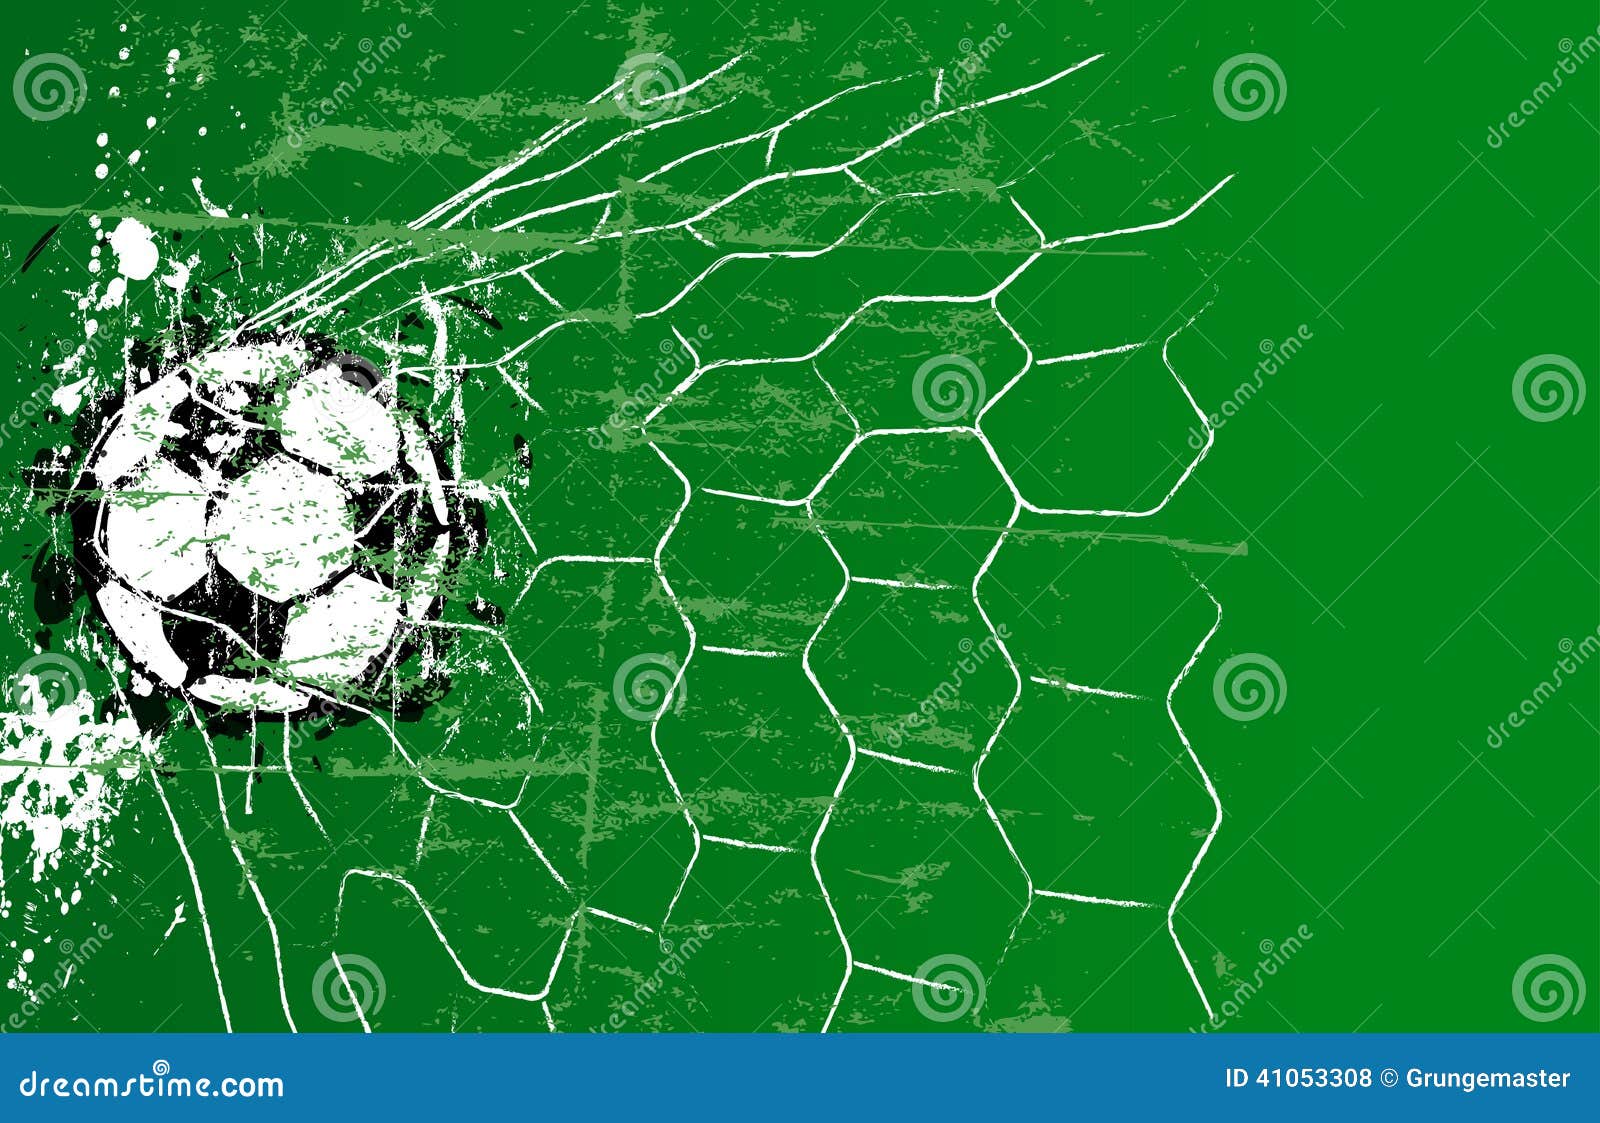 Soccer Football Design Template Stock Vector Illustration Of Background Soccer 41053308